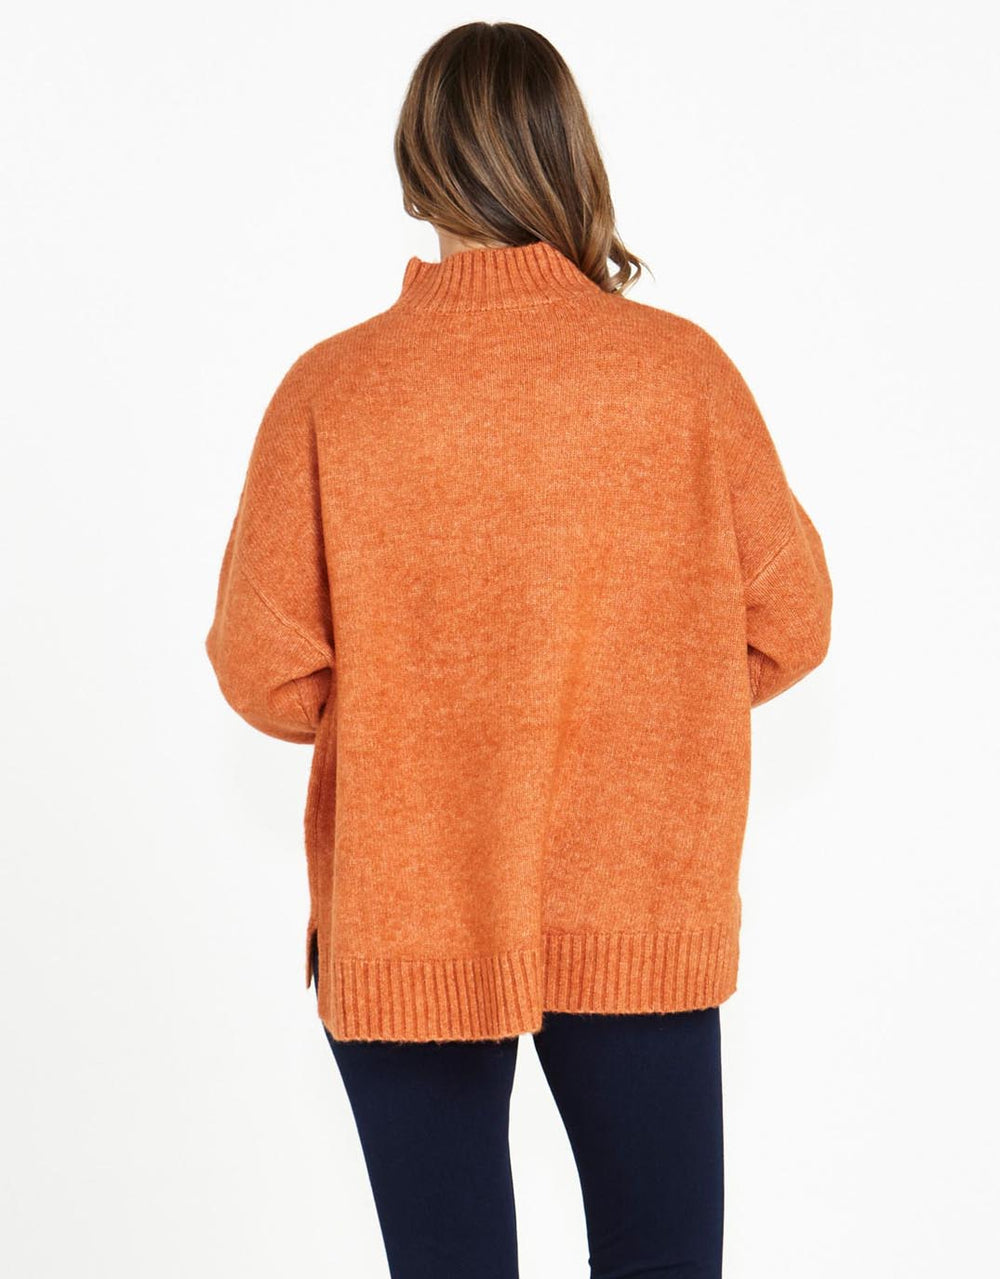 betty-basics-luna-knit-jumper-amber-womens-clothing